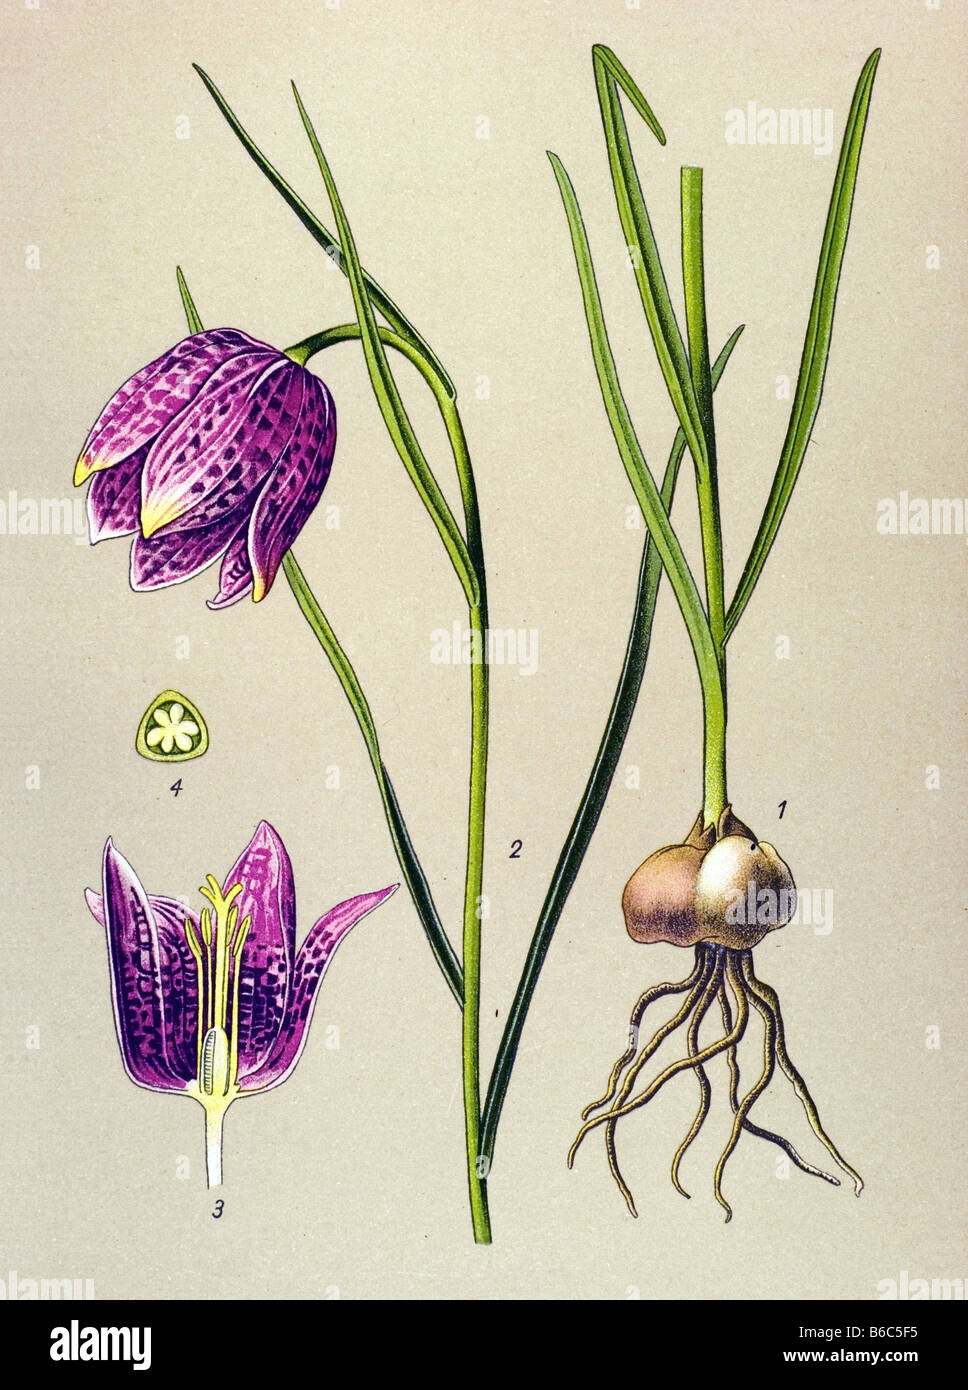 Fritillaria meleagris, Checkered Daffodil, poisonous plants illustrations Stock Photo